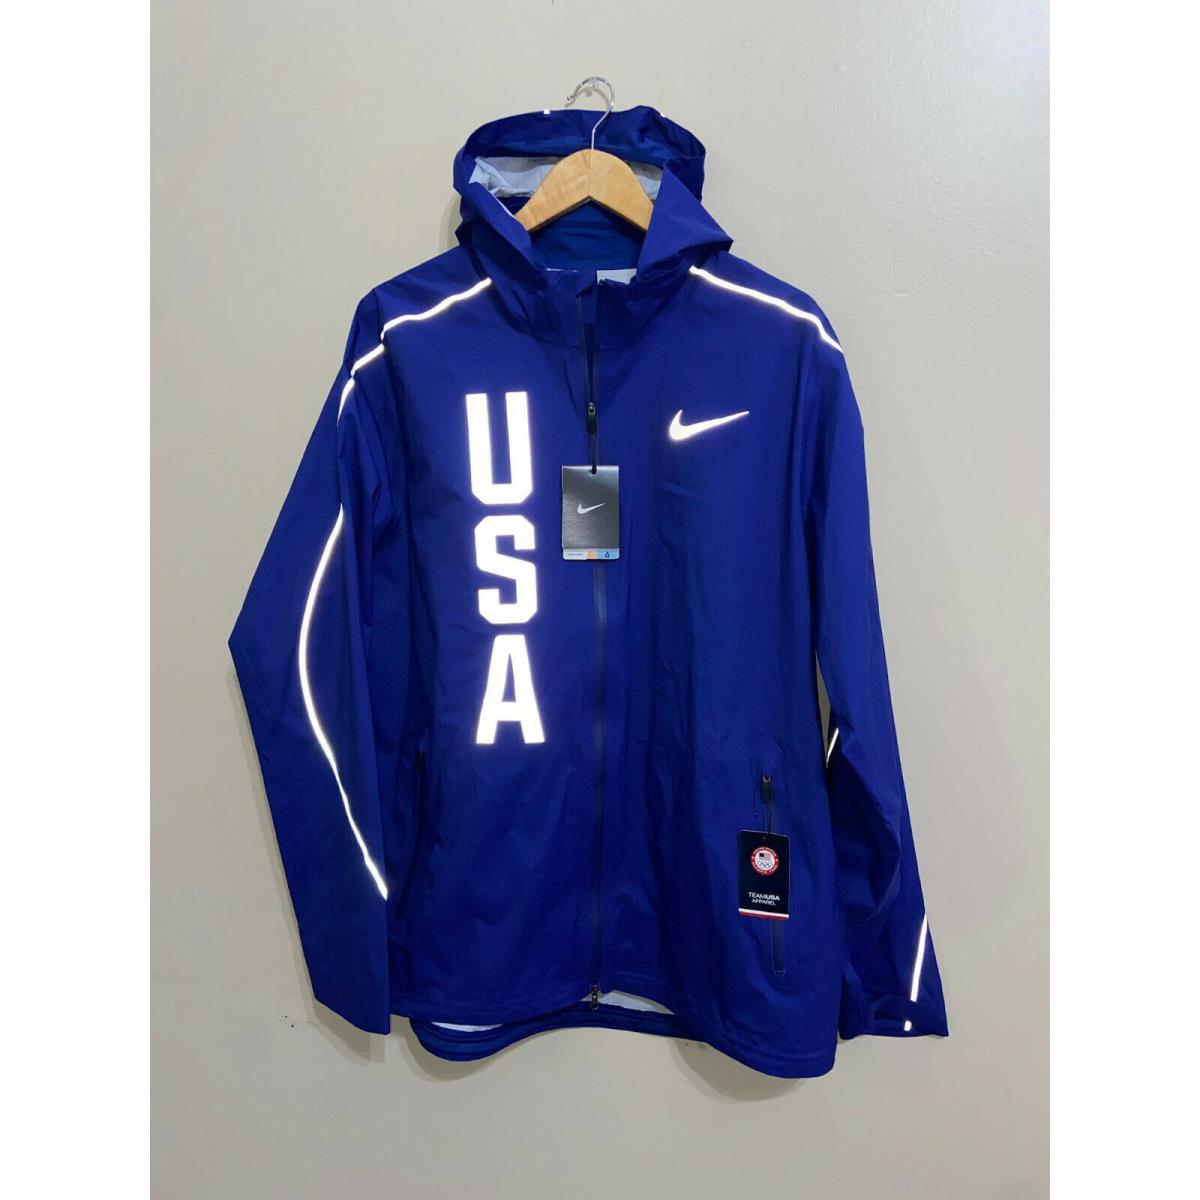 Nike Usa Pro Elite Hypershield Running Track Field Jacket Mens XL 843785-455